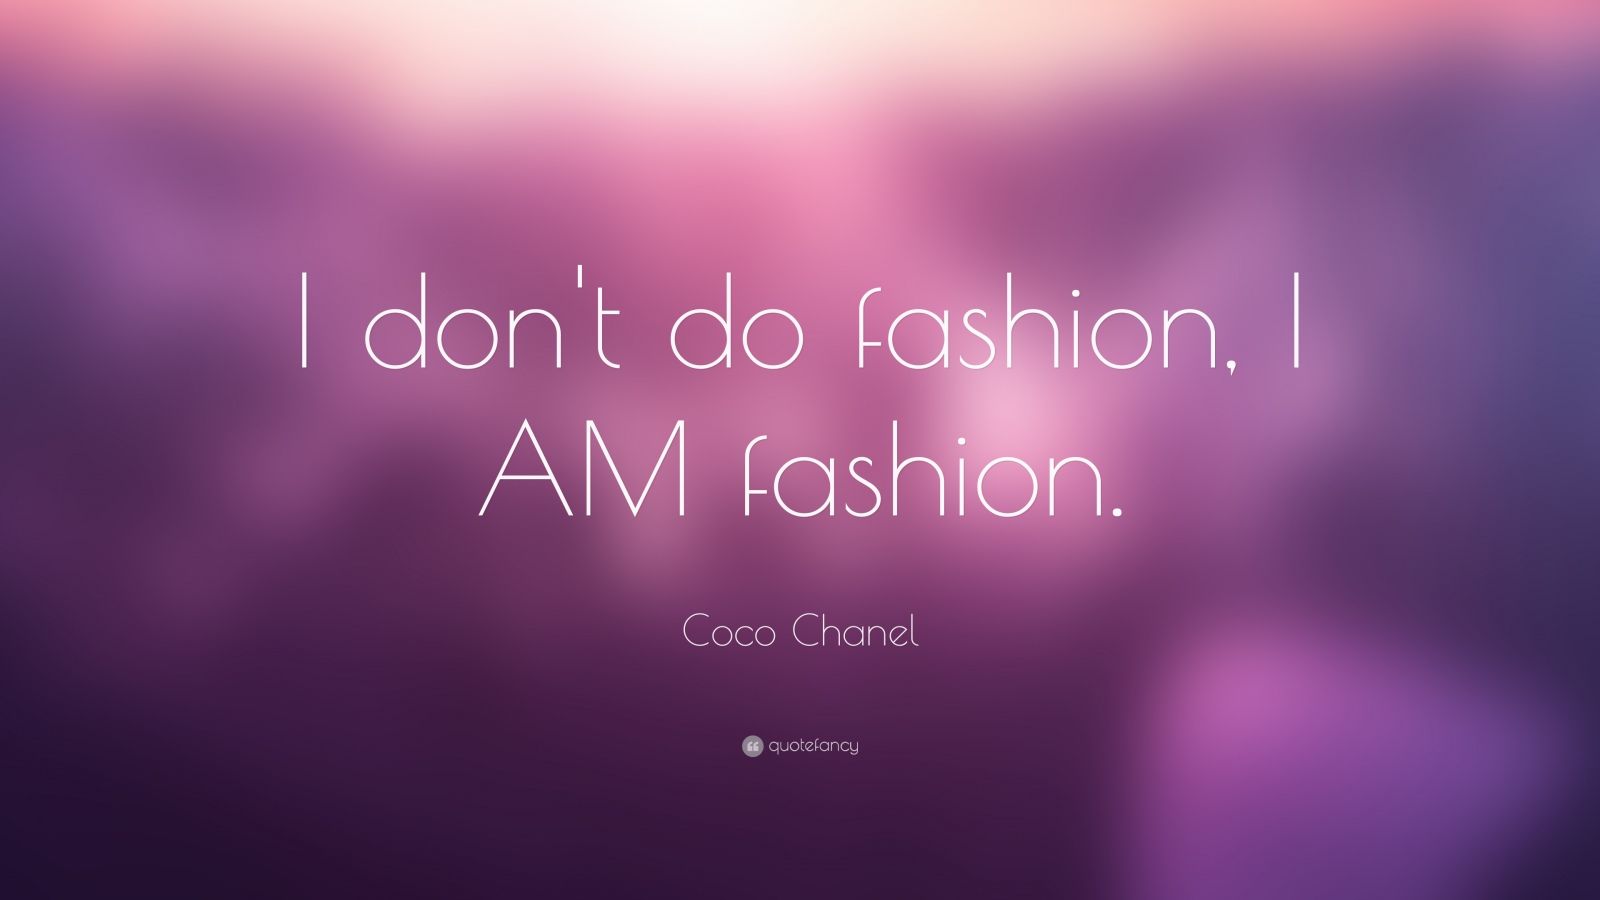 trofast Modtager maskine kaffe Coco Chanel Quote: “I don't do fashion, I AM fashion.”